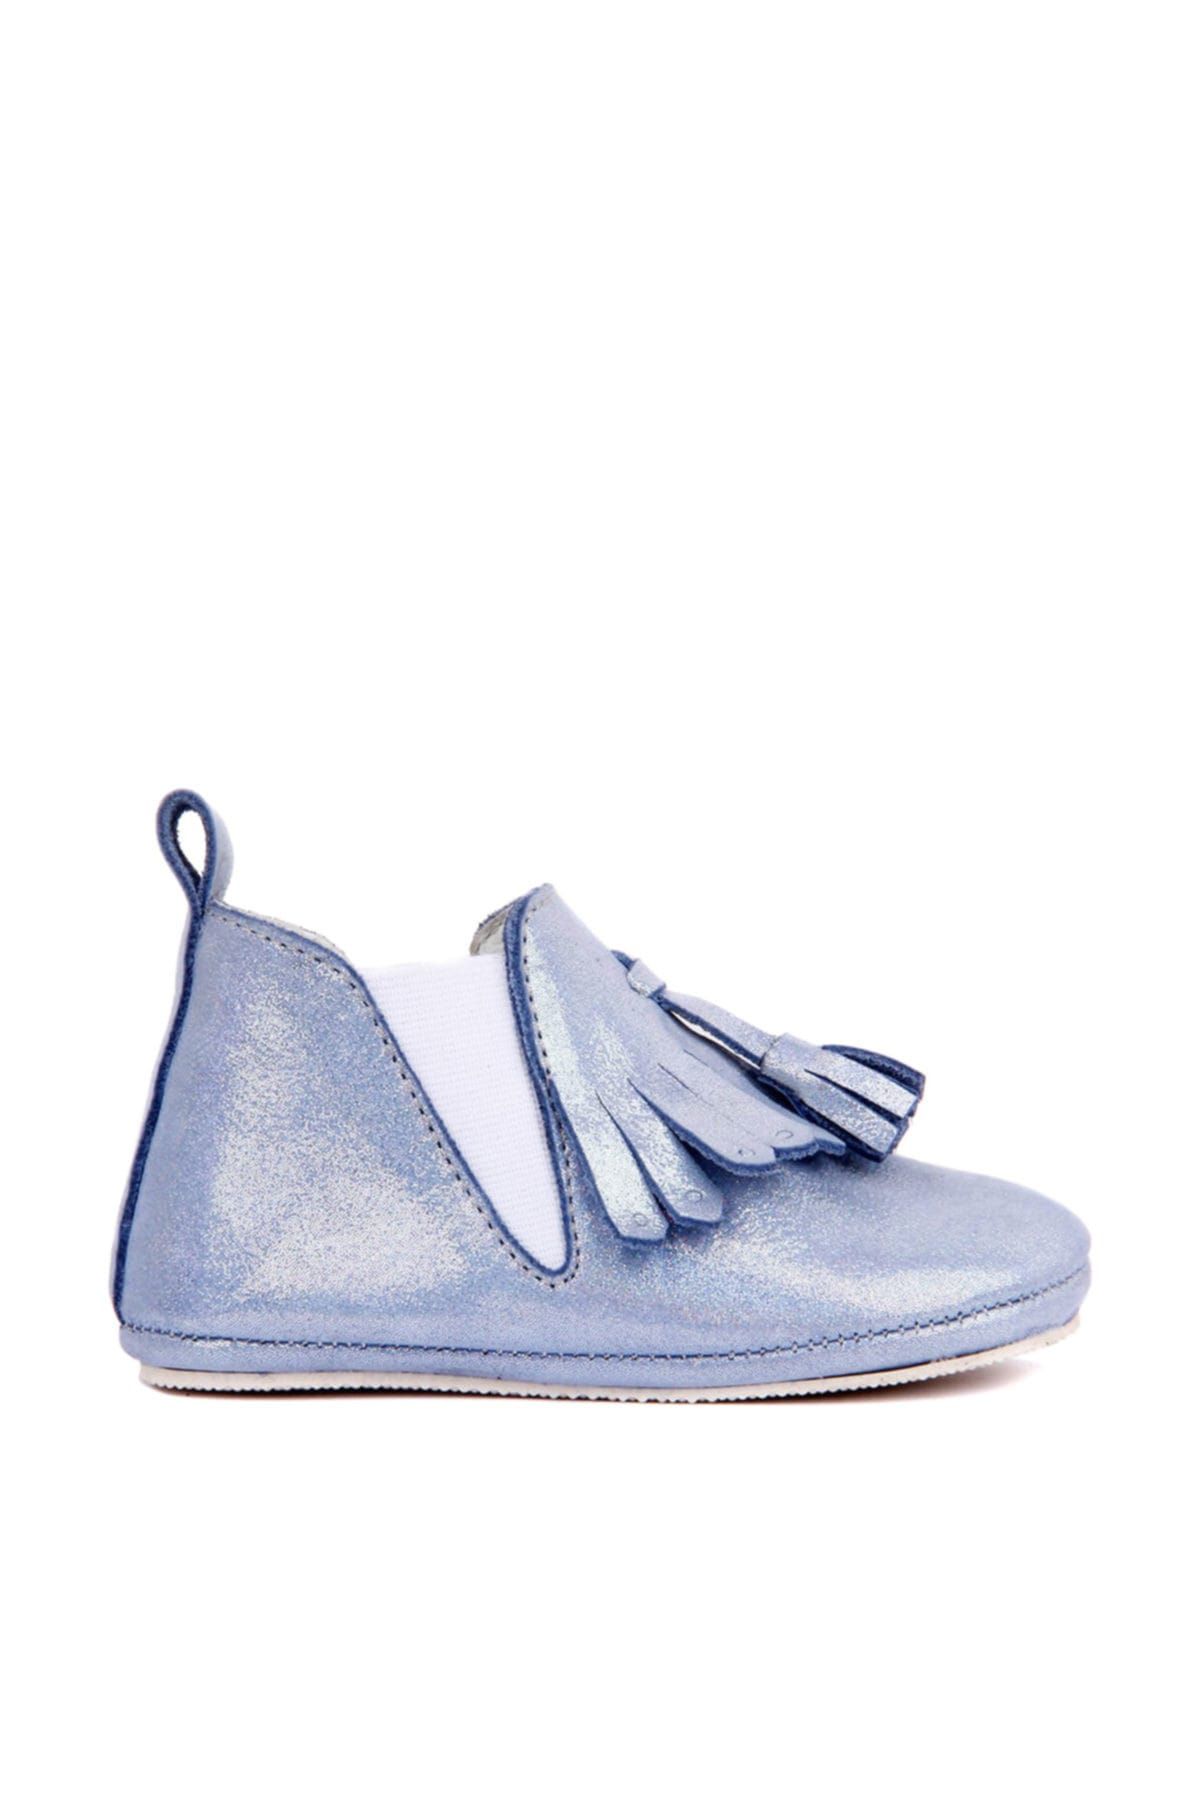 Sail Lakers Kot Mavisi Unisex Bebek Ayakkabısı 112-0150-RUBBER